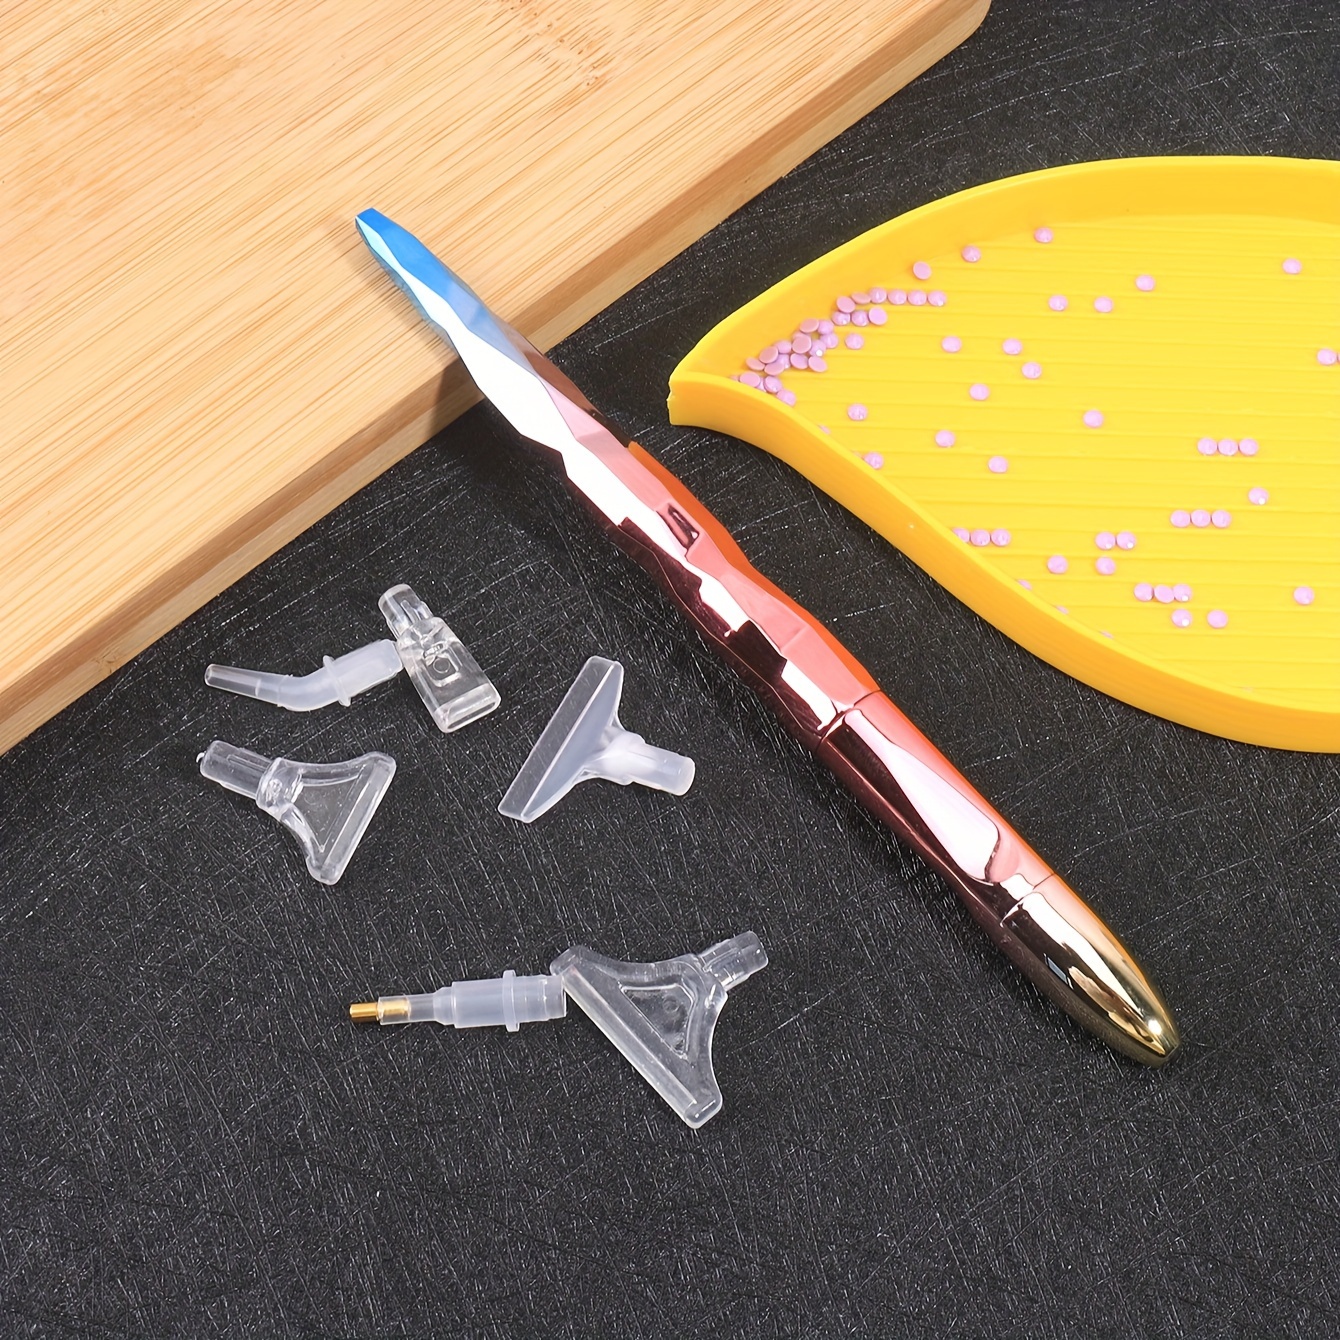  Diamond Painting Pen,Handmade Diamond Art Pen Kit,Resin 5D DIY  Diamond Drill Pen for Art Crafts Cross Stitch Hobby,Nail Art Embroidery  Decoration,Mosaic Making (Sky Blue-01)